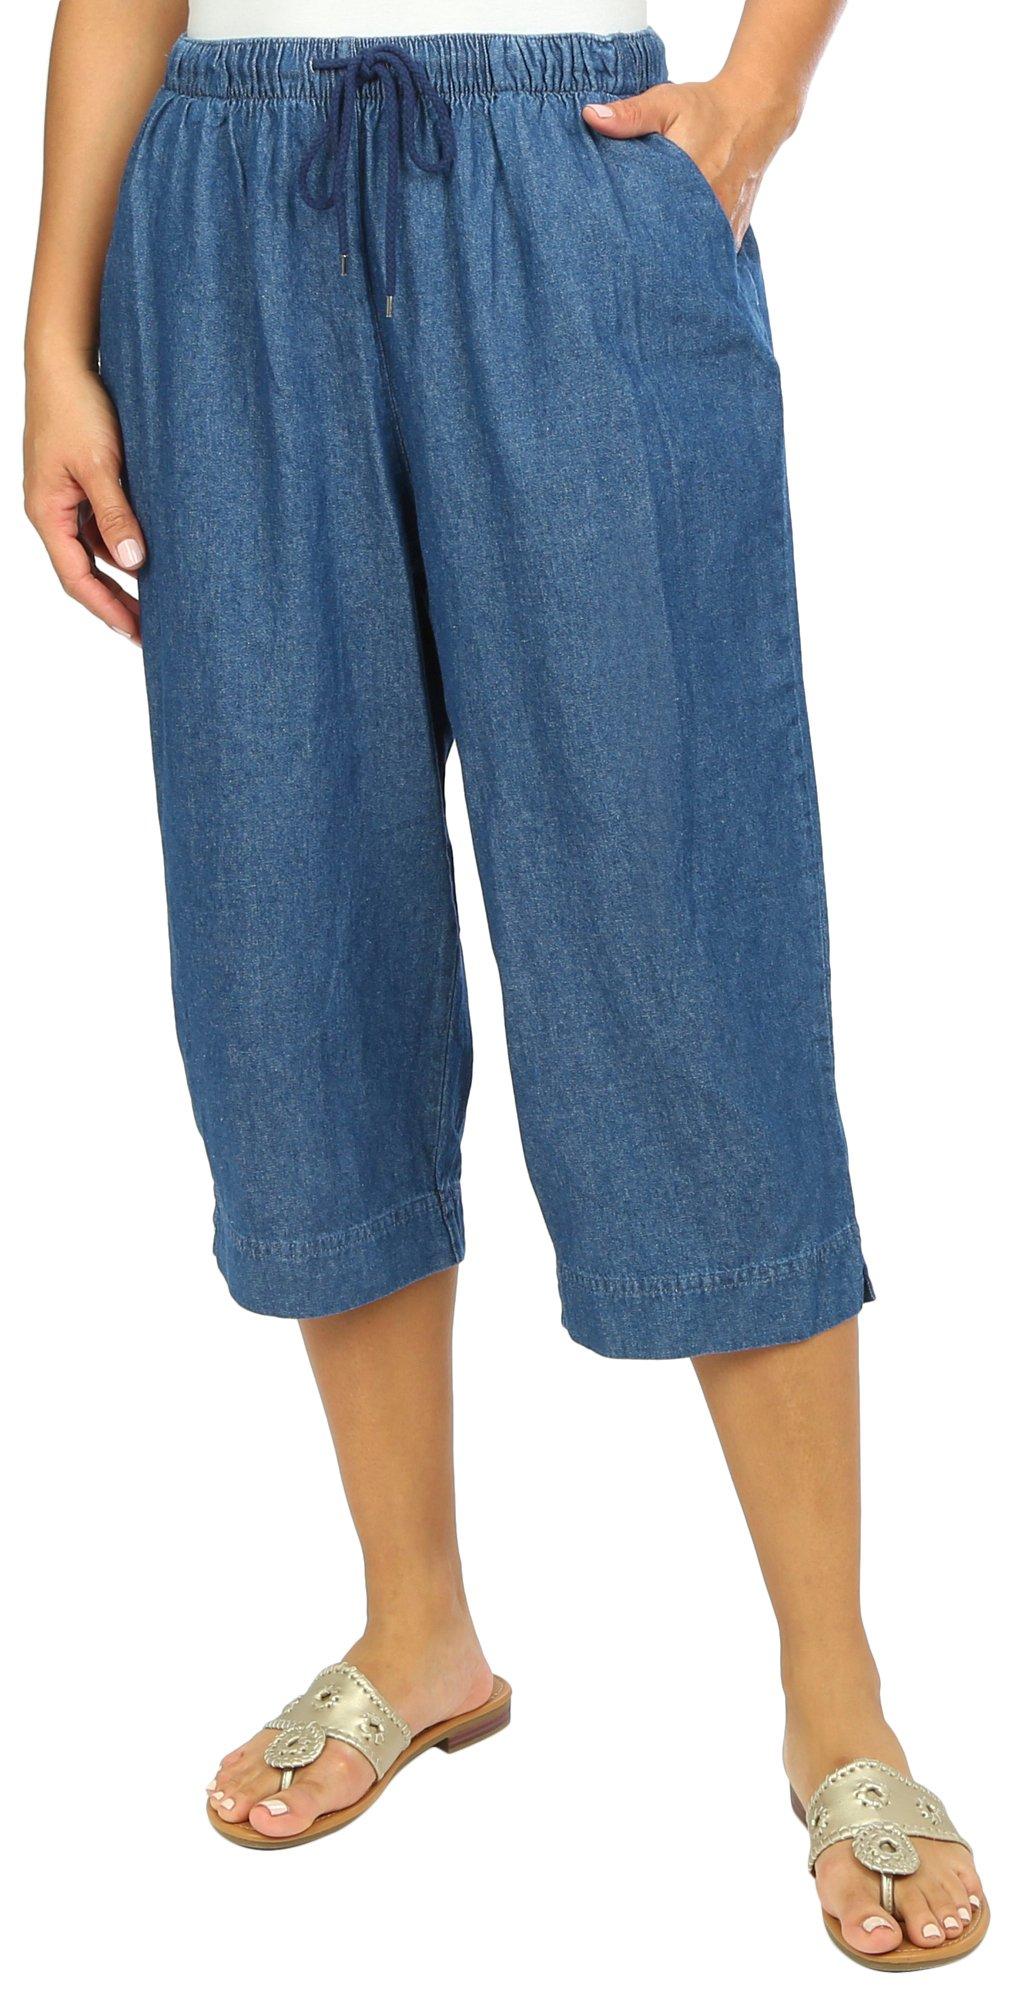 Women's Capri Pants, Capris, Cropped and Ankle Pants